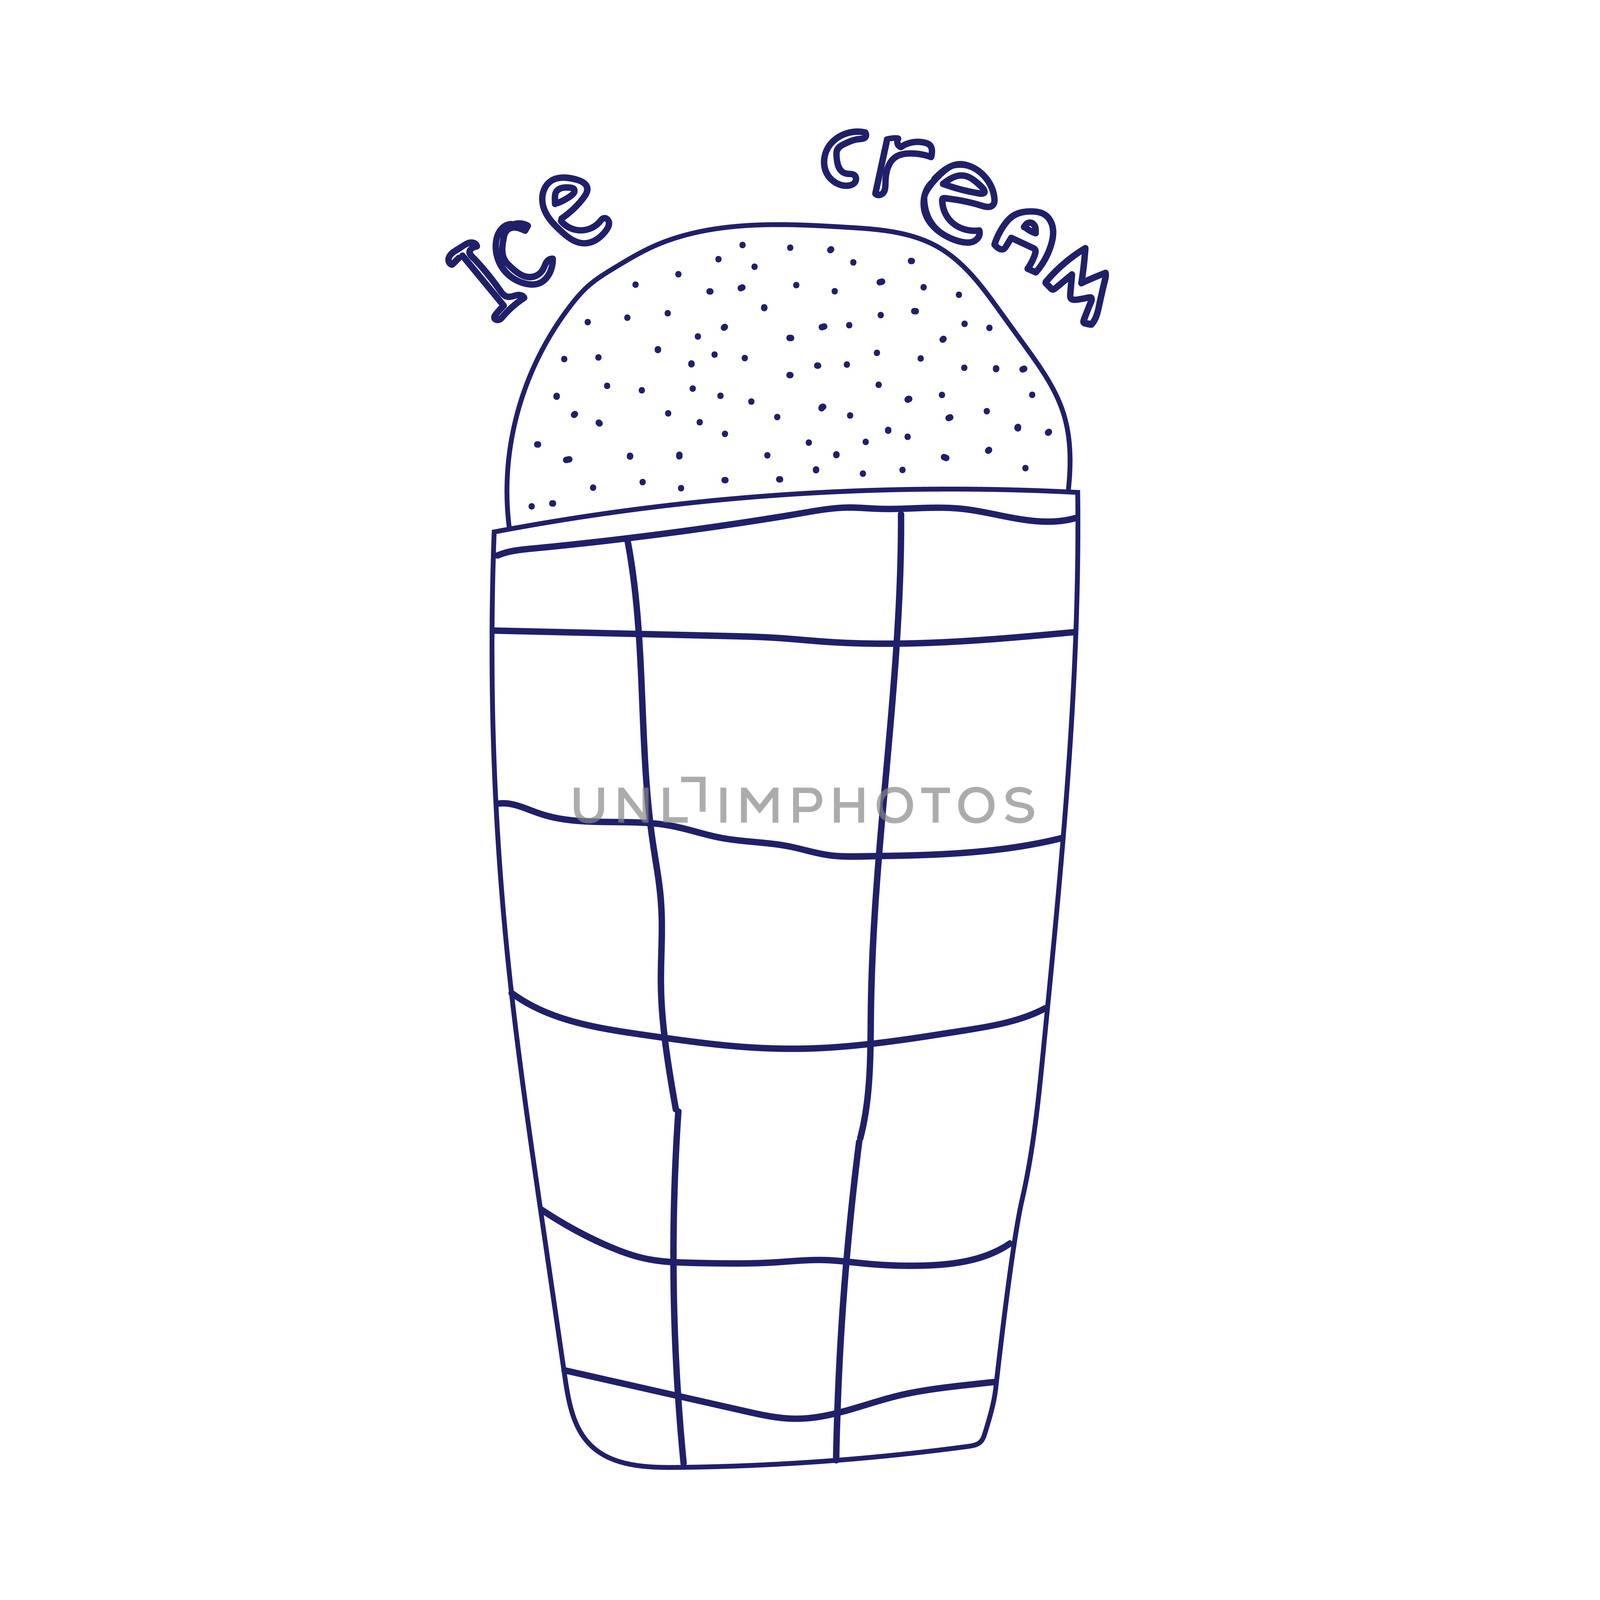 Doodle ice cream cone frozen dessert style sketch in format.